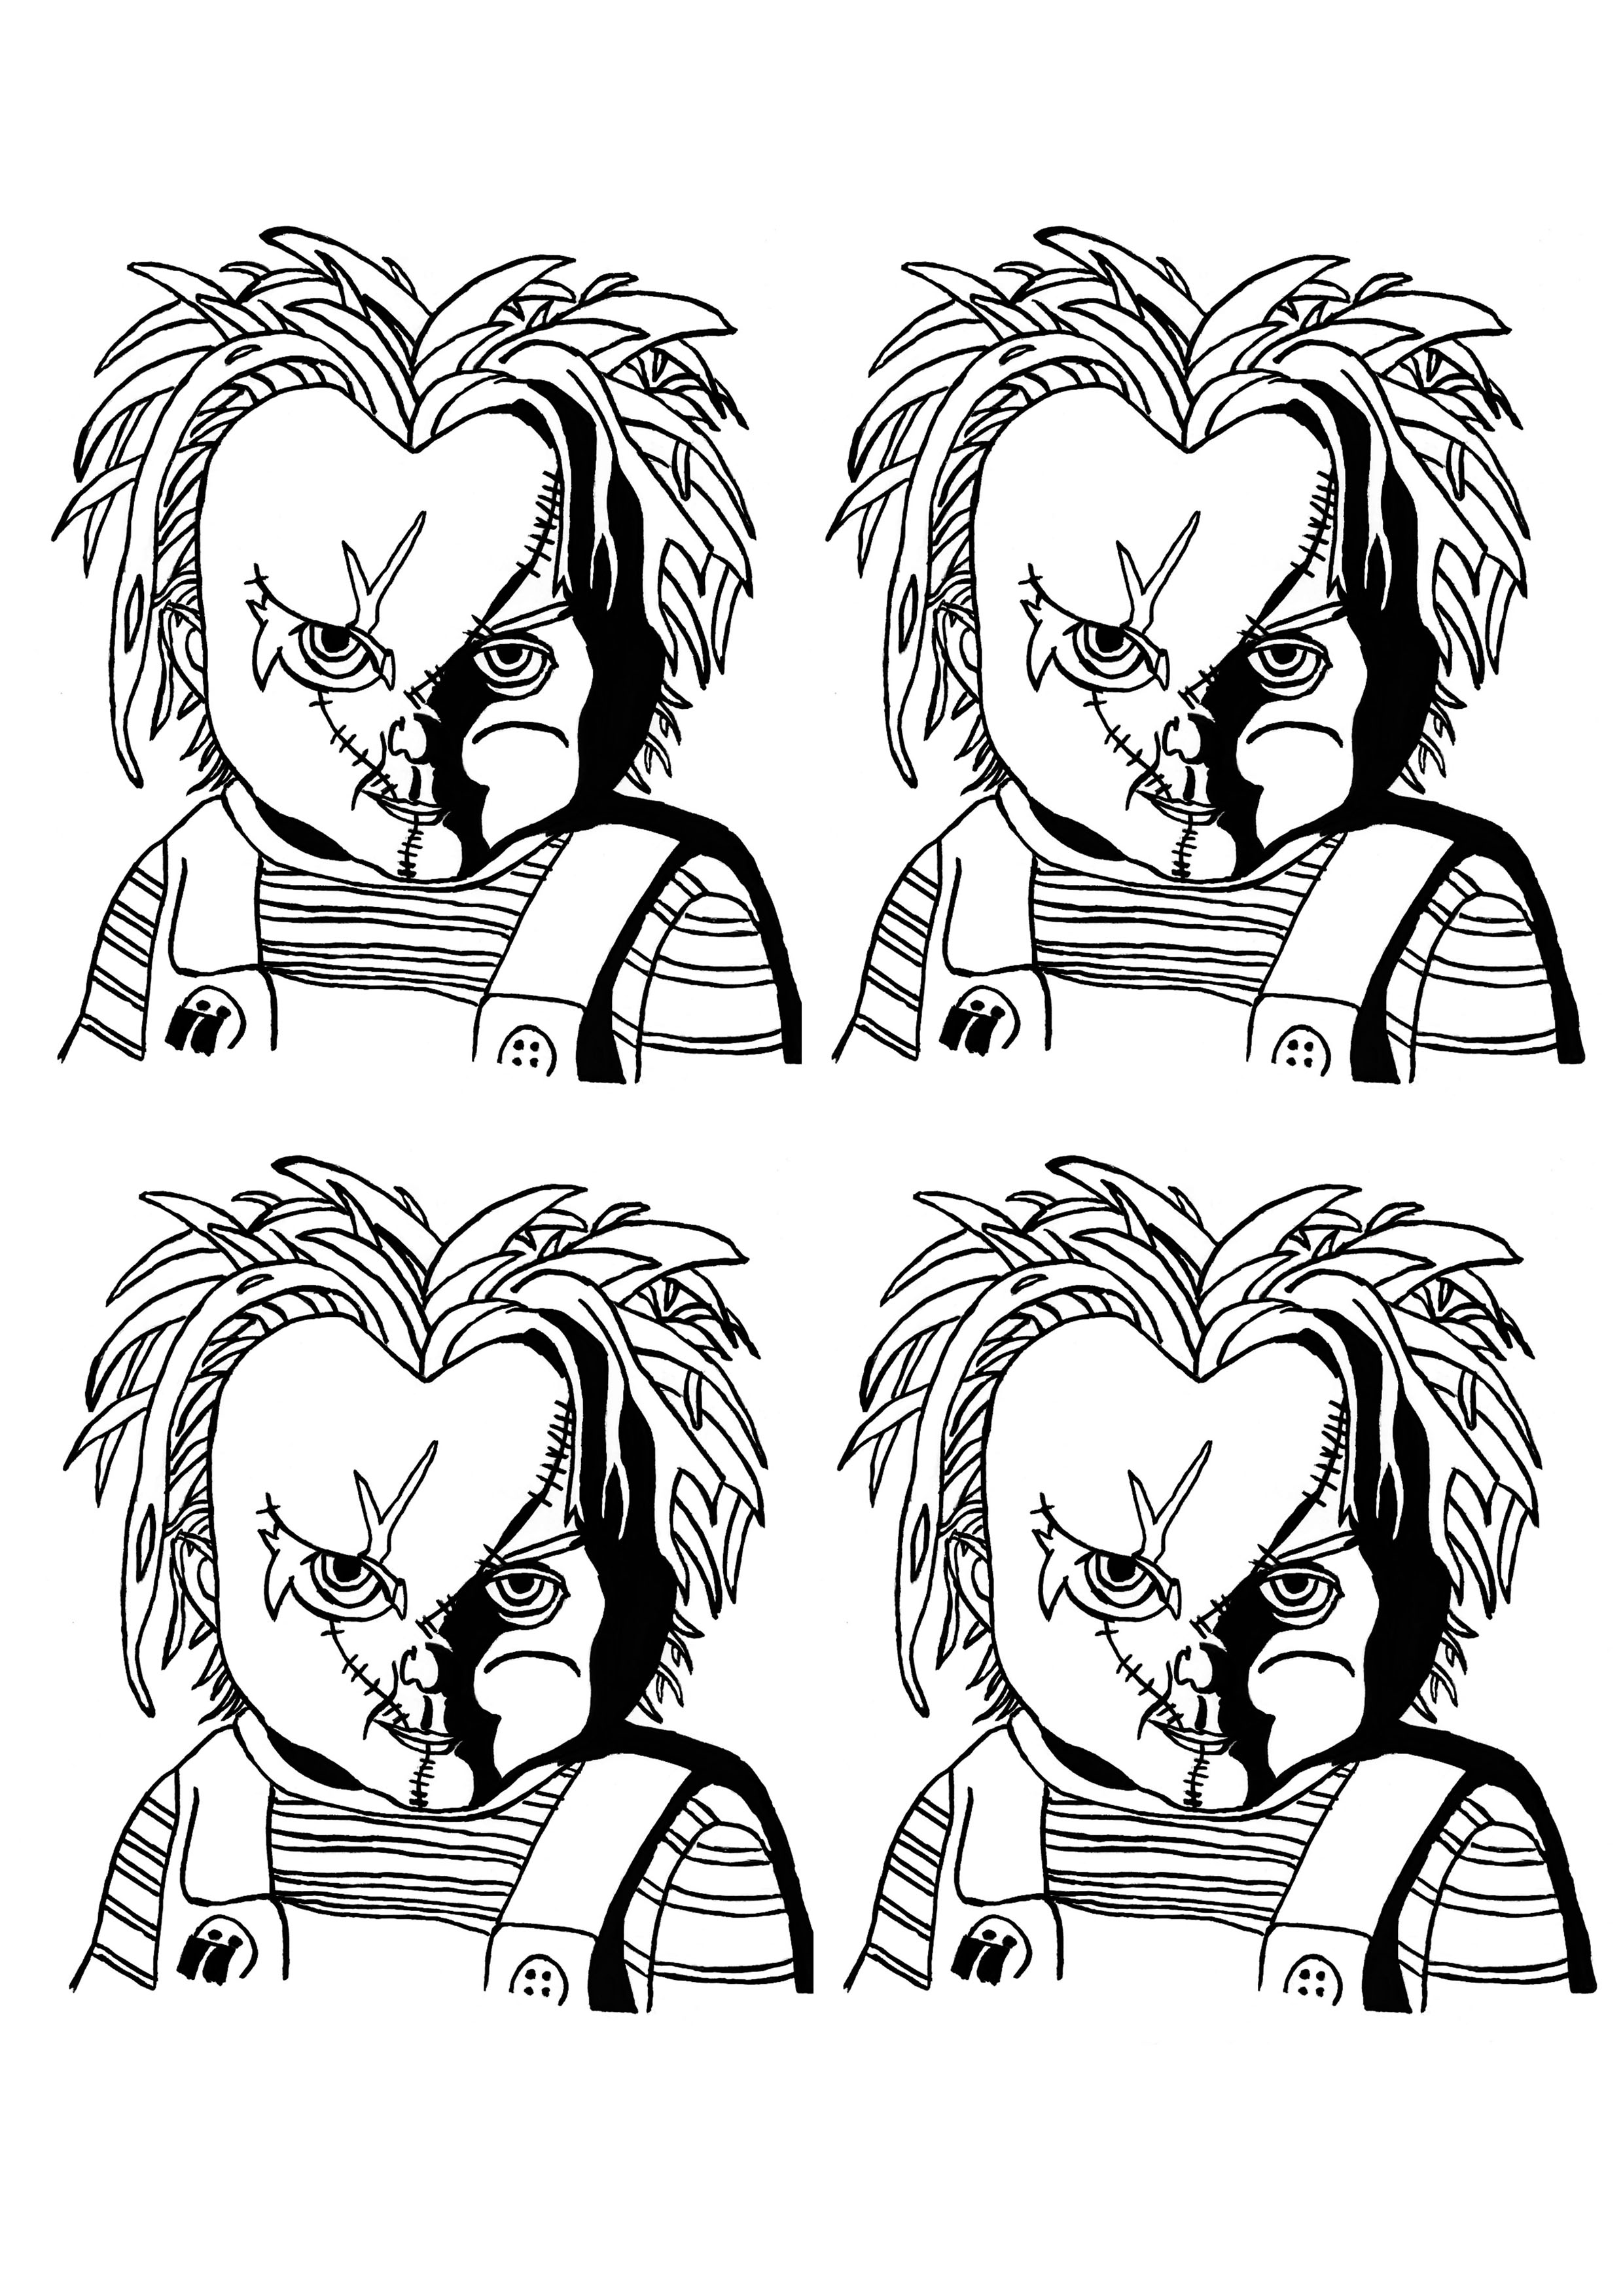 Retrato ao estilo de Andy Warhol do assustador boneco Chucky, para colorir no Dia das Bruxas